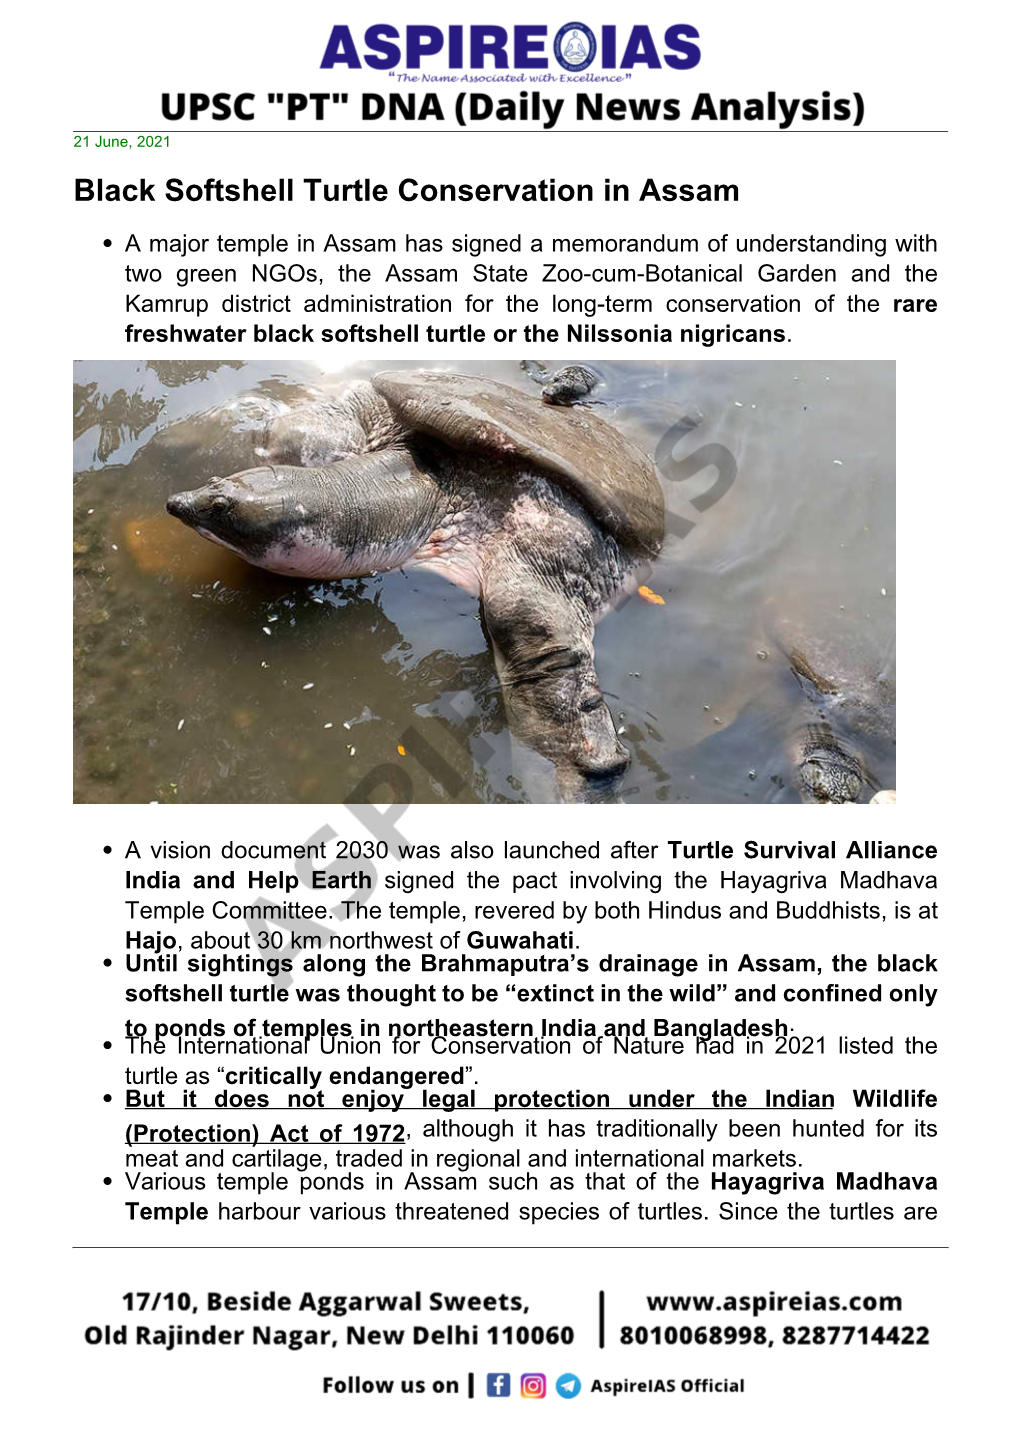 Black Softshell Turtle Conservation in Assam